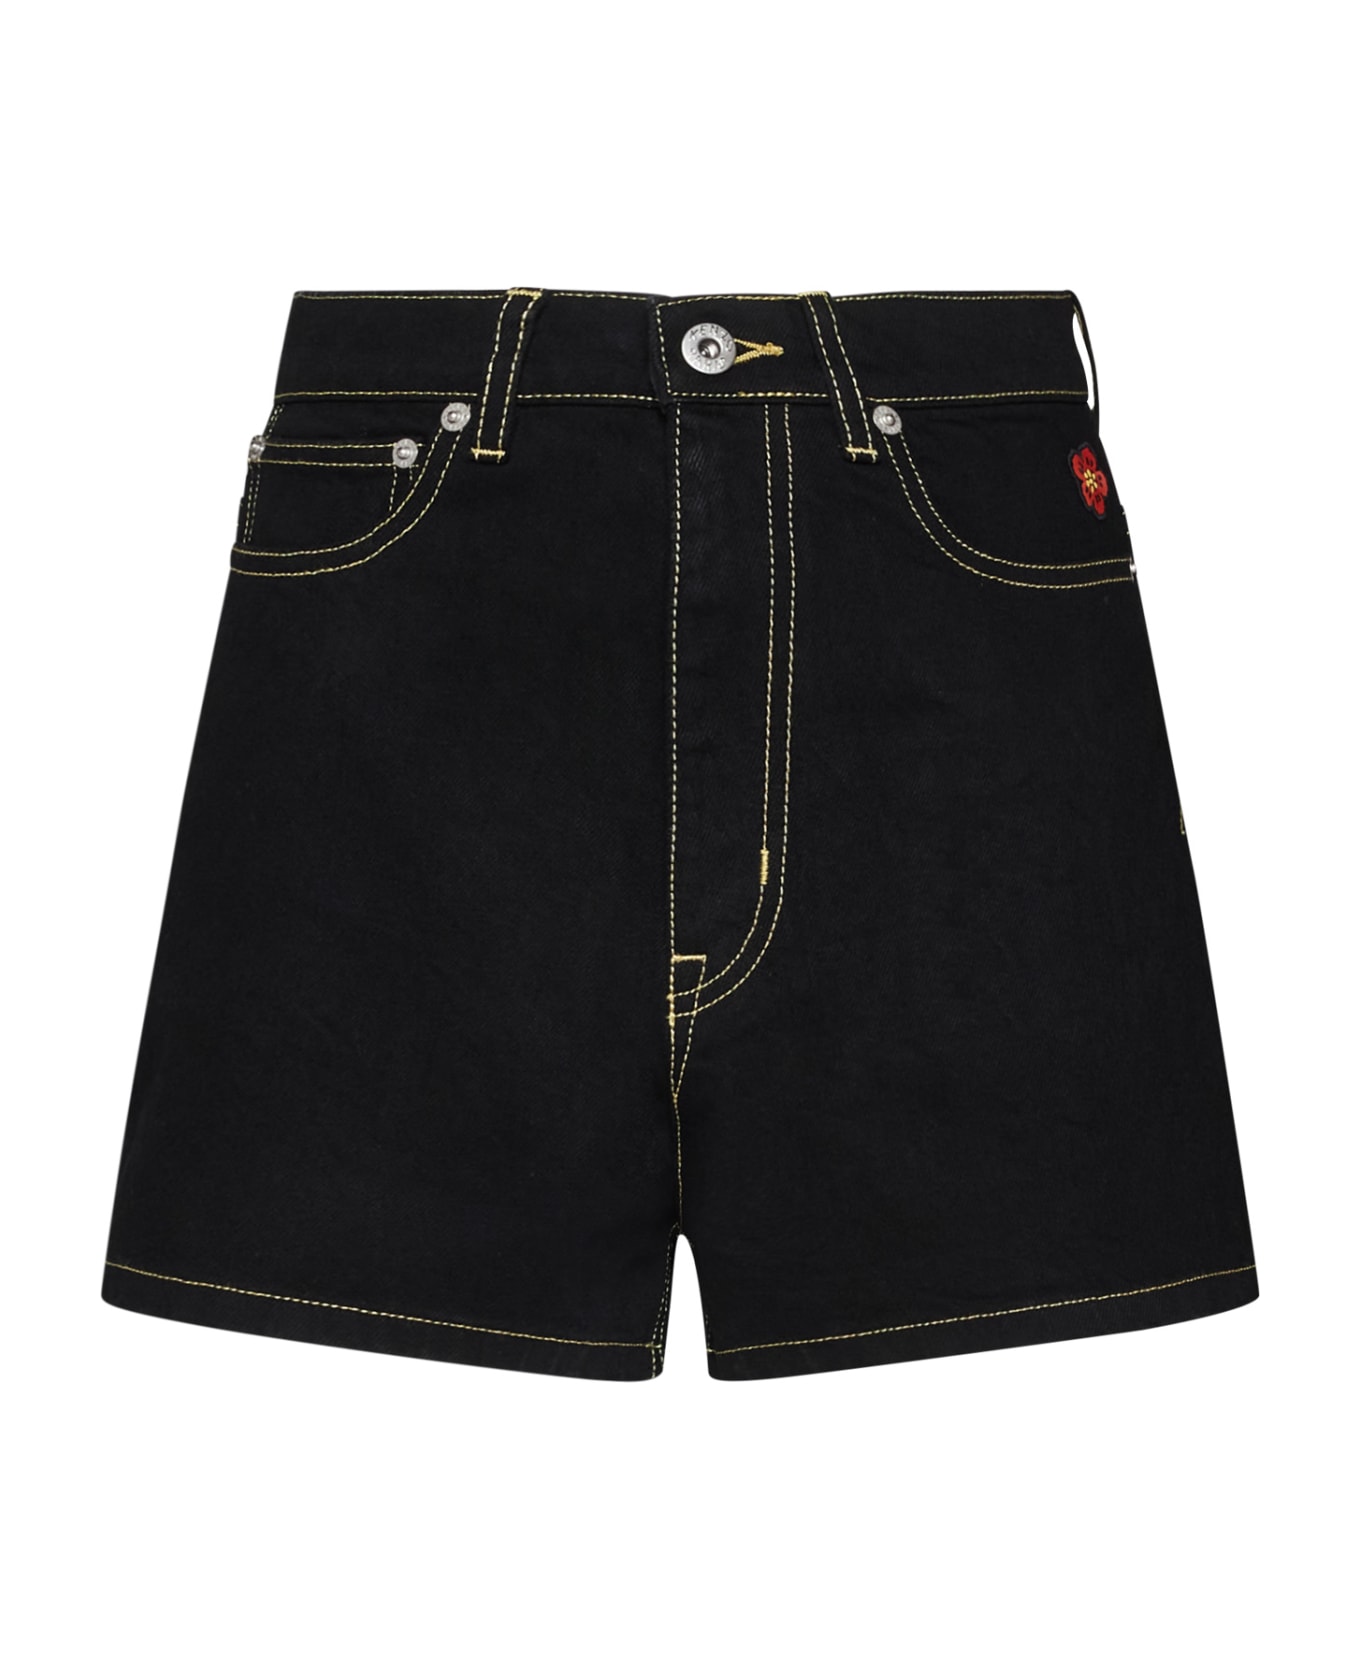 Kenzo Denim Shorts - Rinse black denim